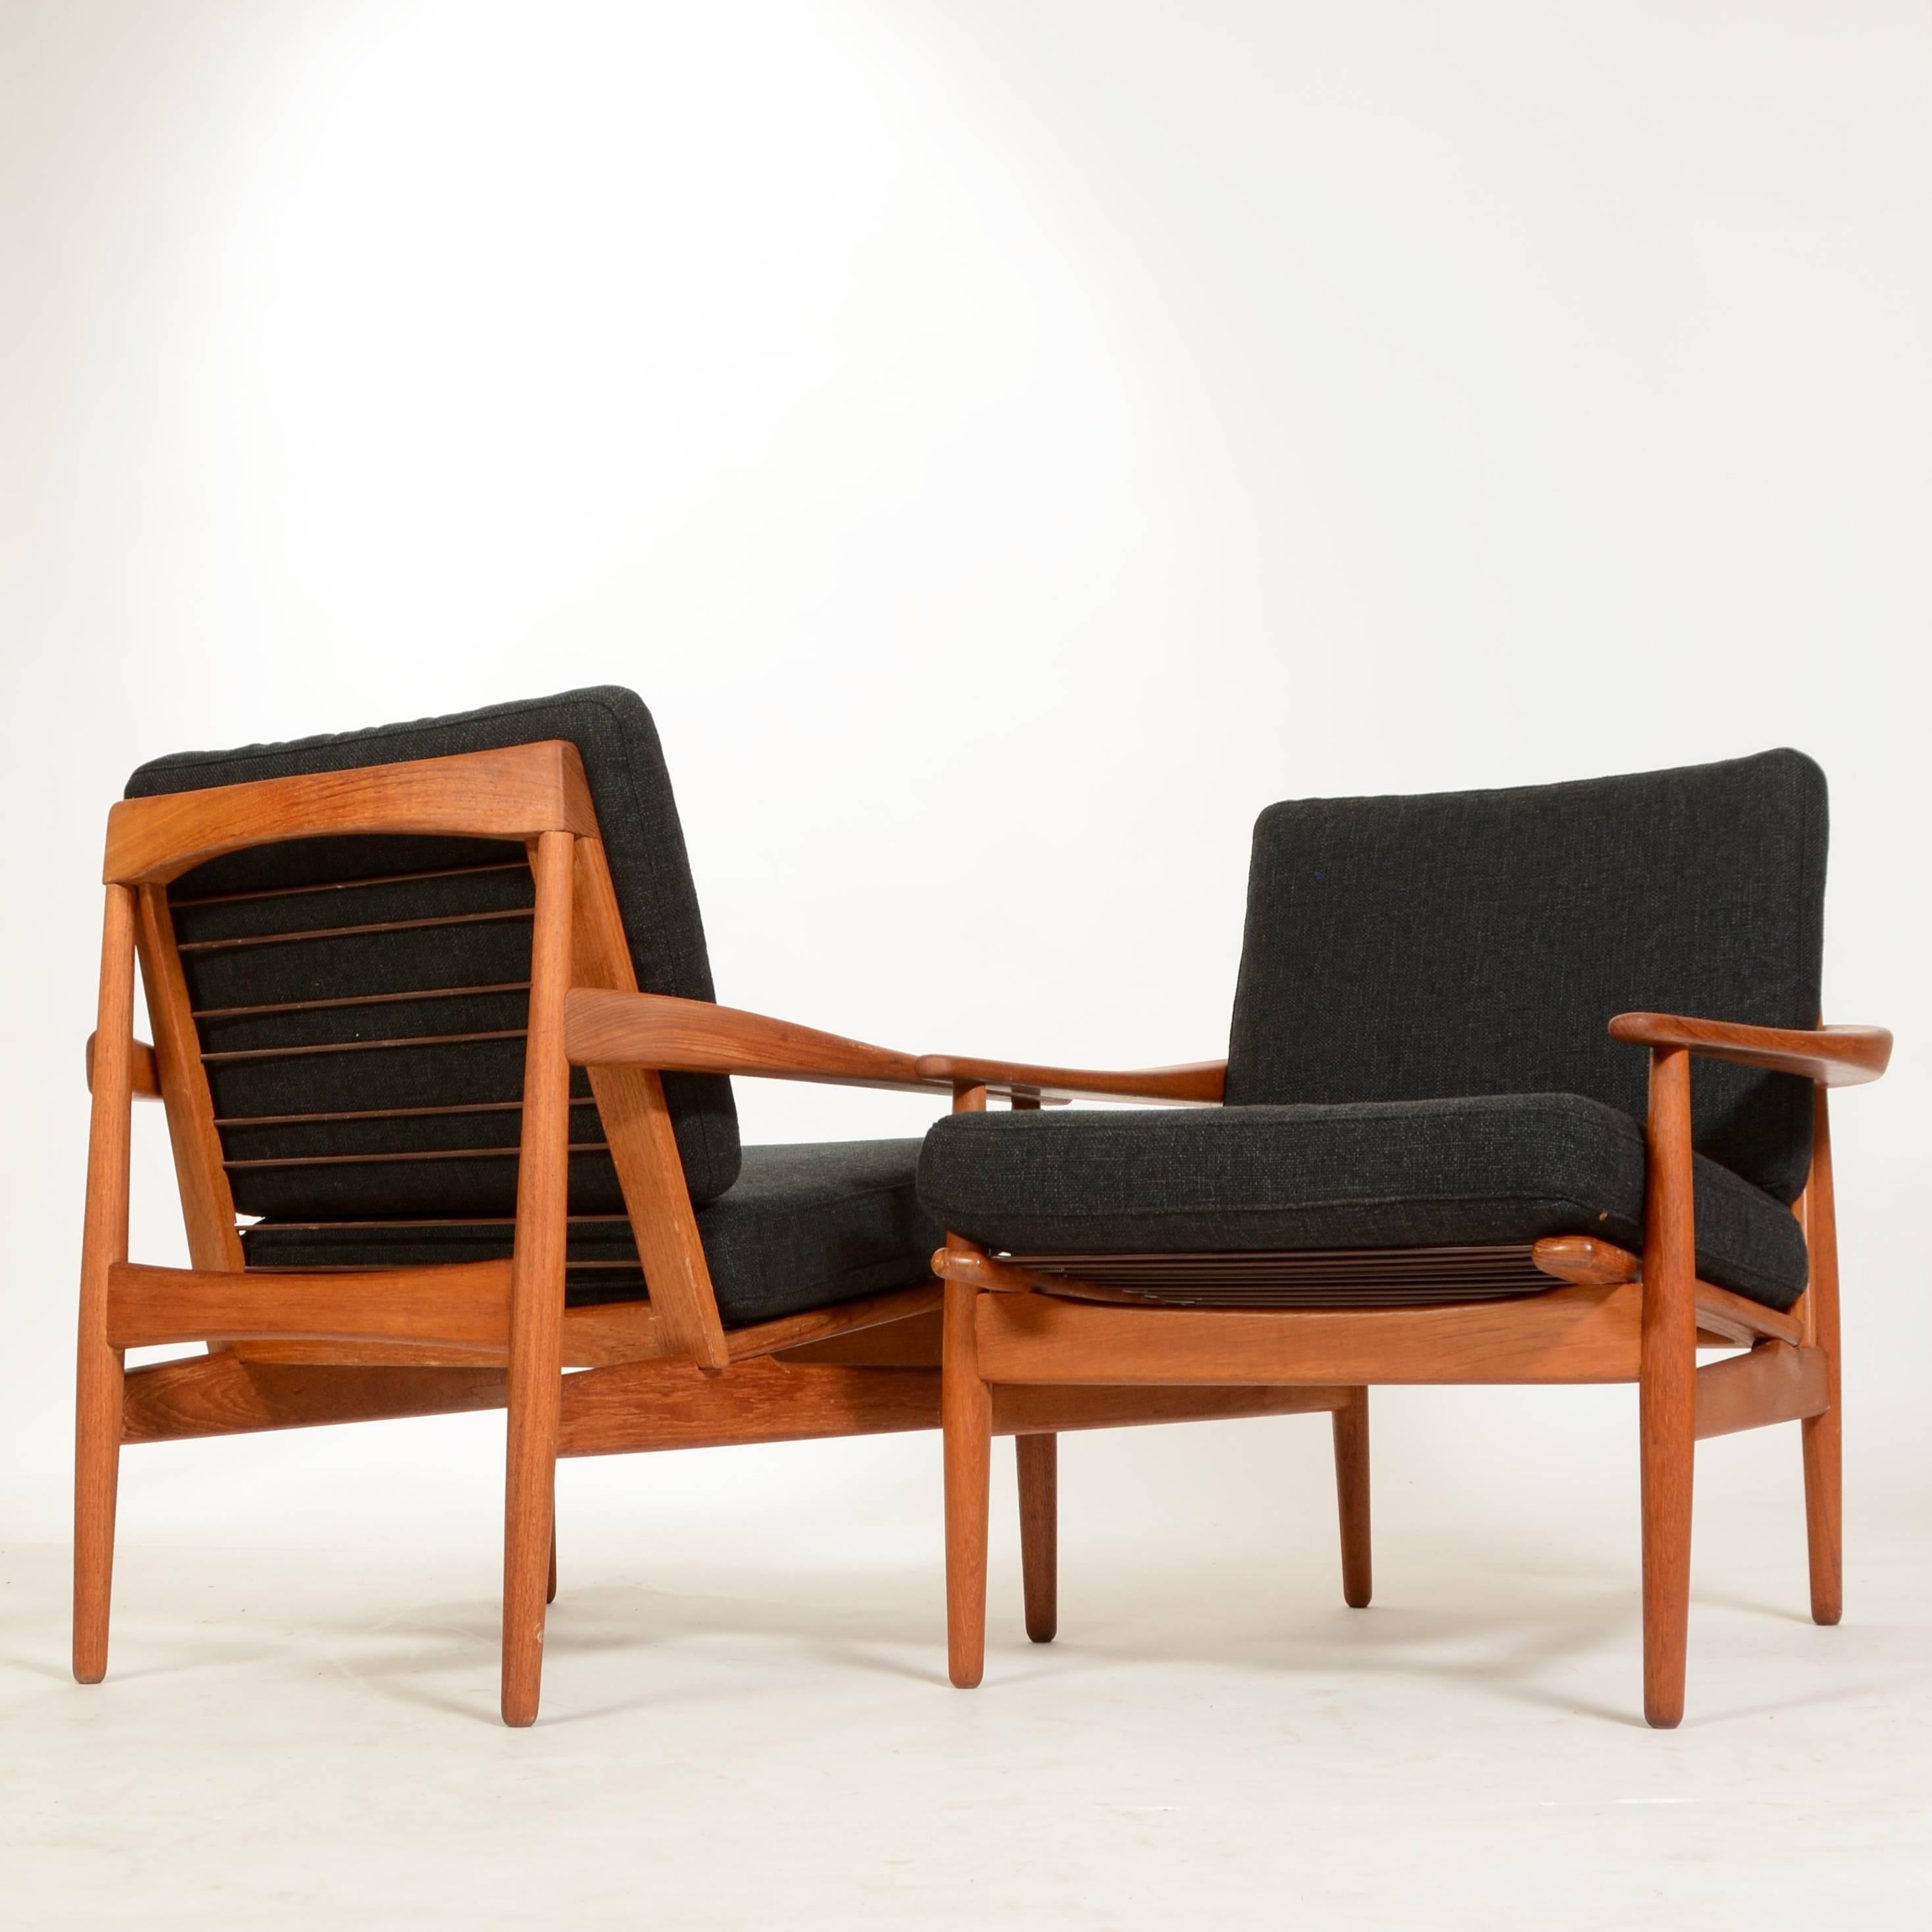 Oiled Pair of Danish Modern Greta Jalk Style Teak Lounge Chairs